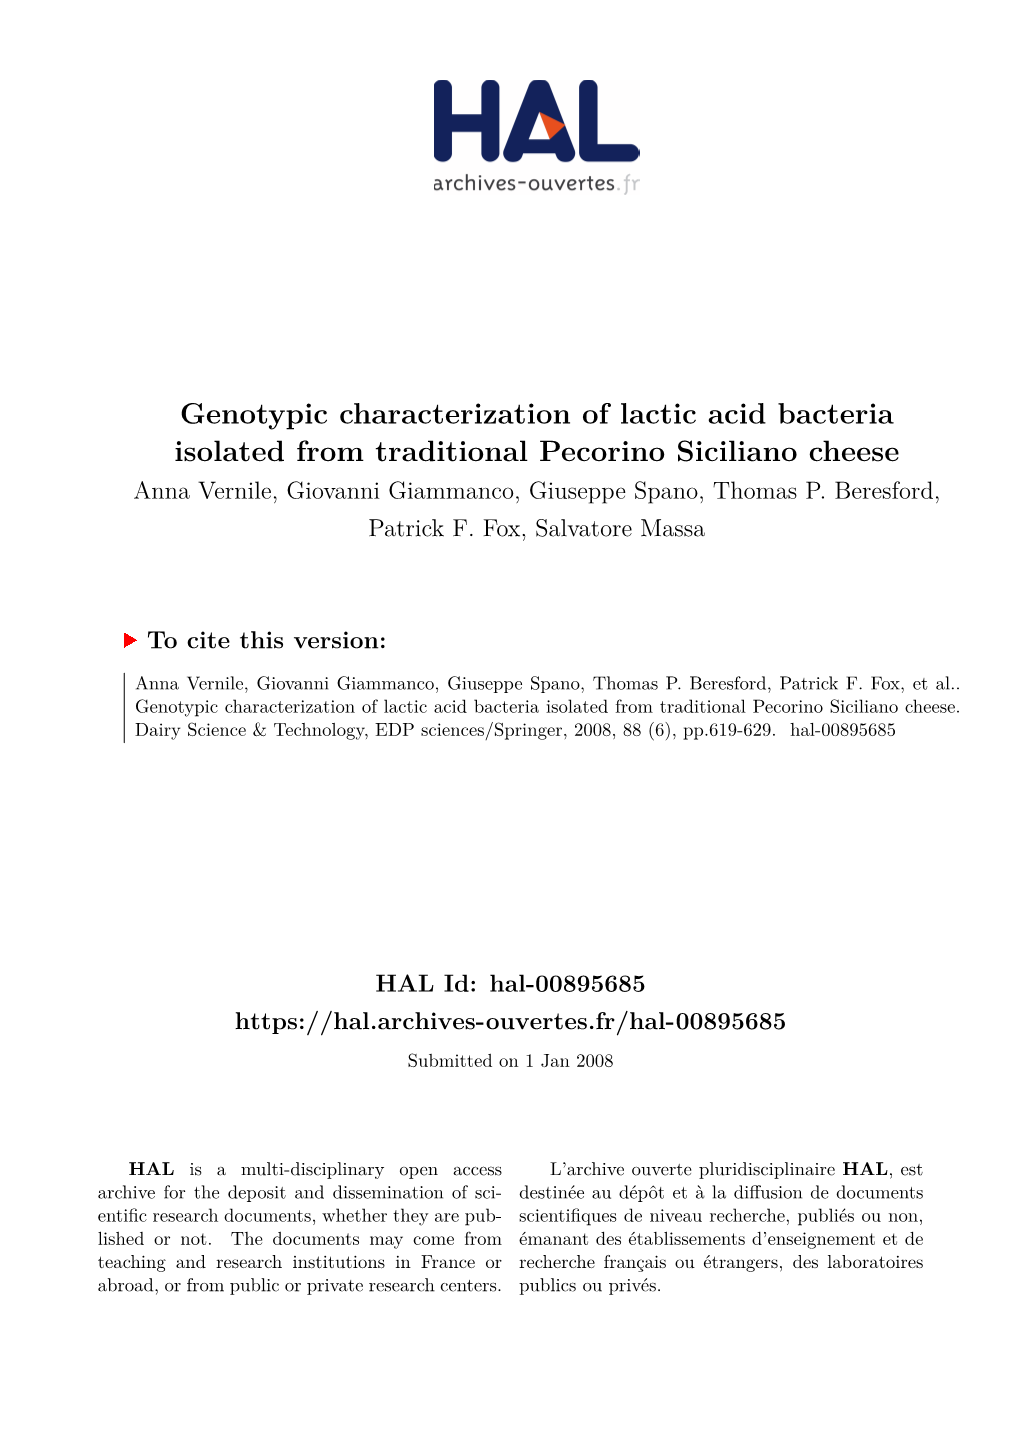 Genotypic Characterization of Lactic Acid Bacteria Isolated from Traditional Pecorino Siciliano Cheese Anna Vernile, Giovanni Giammanco, Giuseppe Spano, Thomas P